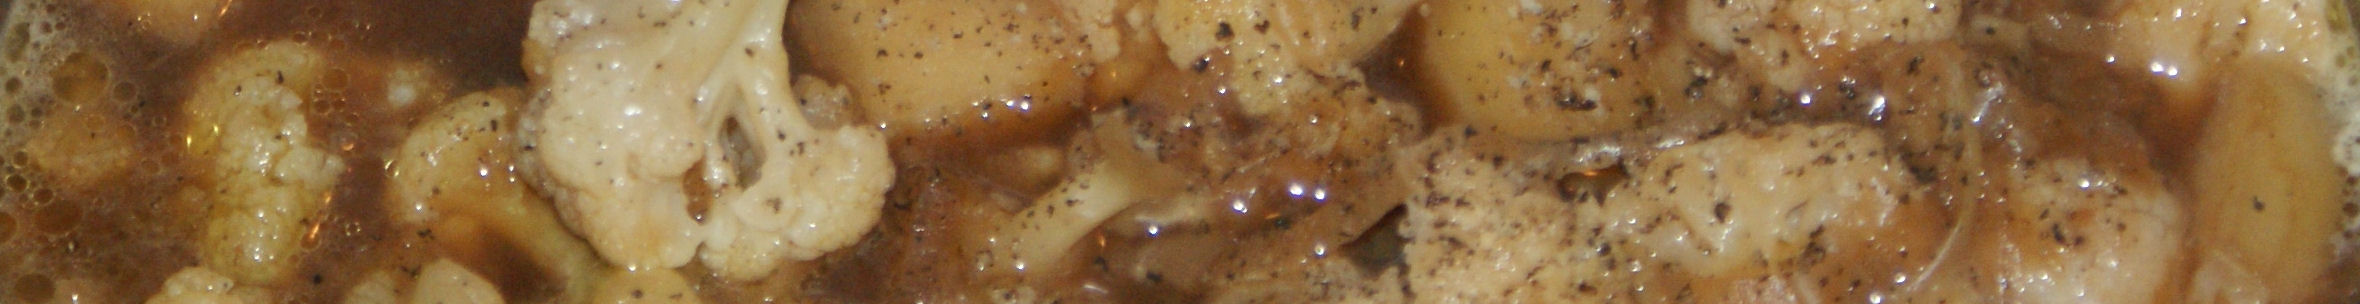 Truffled cauliflower soup closeup